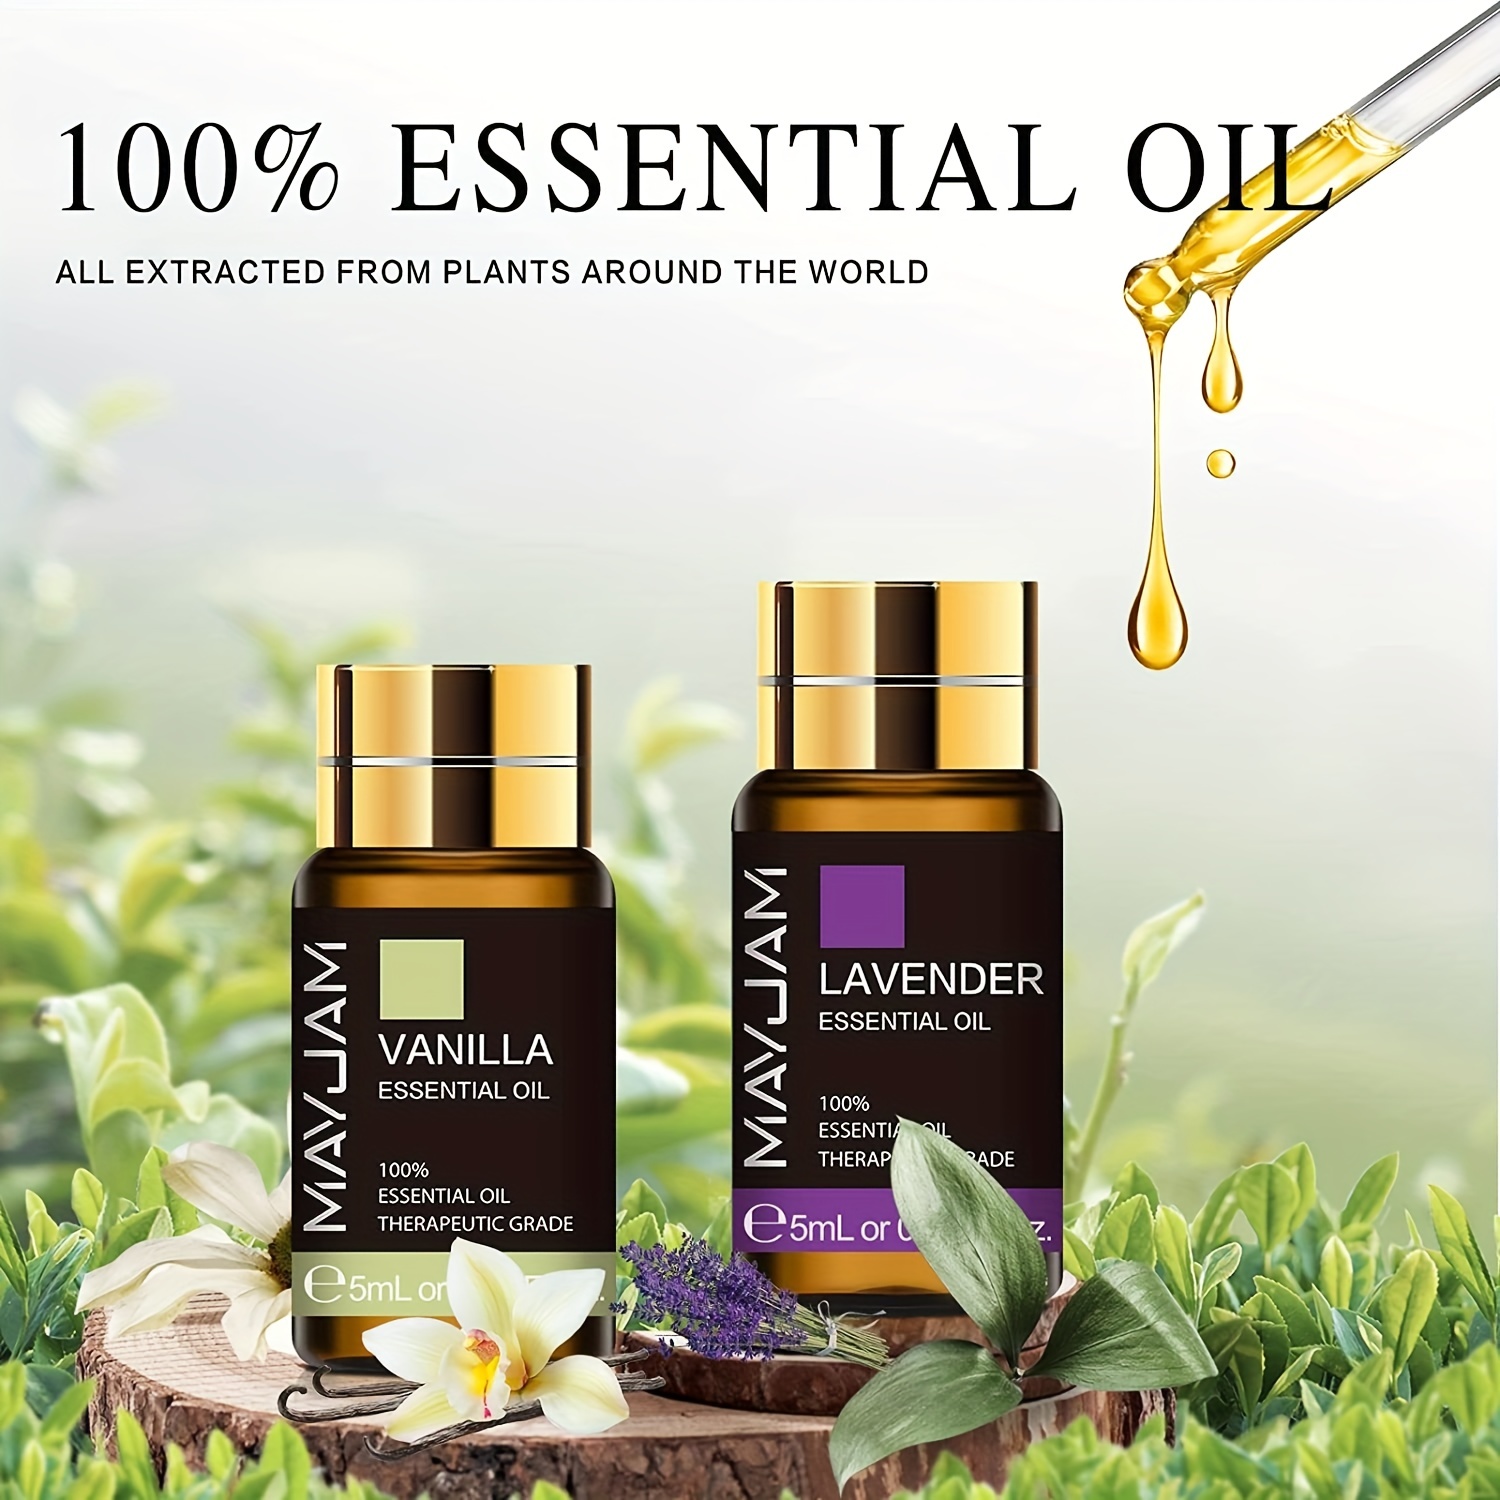 Vanilla Essential Oil Set,2 Pack 10ml Aromatherapy Perfume Oils,100% Pure Organic Natural Therapeutic-Grade Vanilla Fragrance Oil for Diffuser, Skin